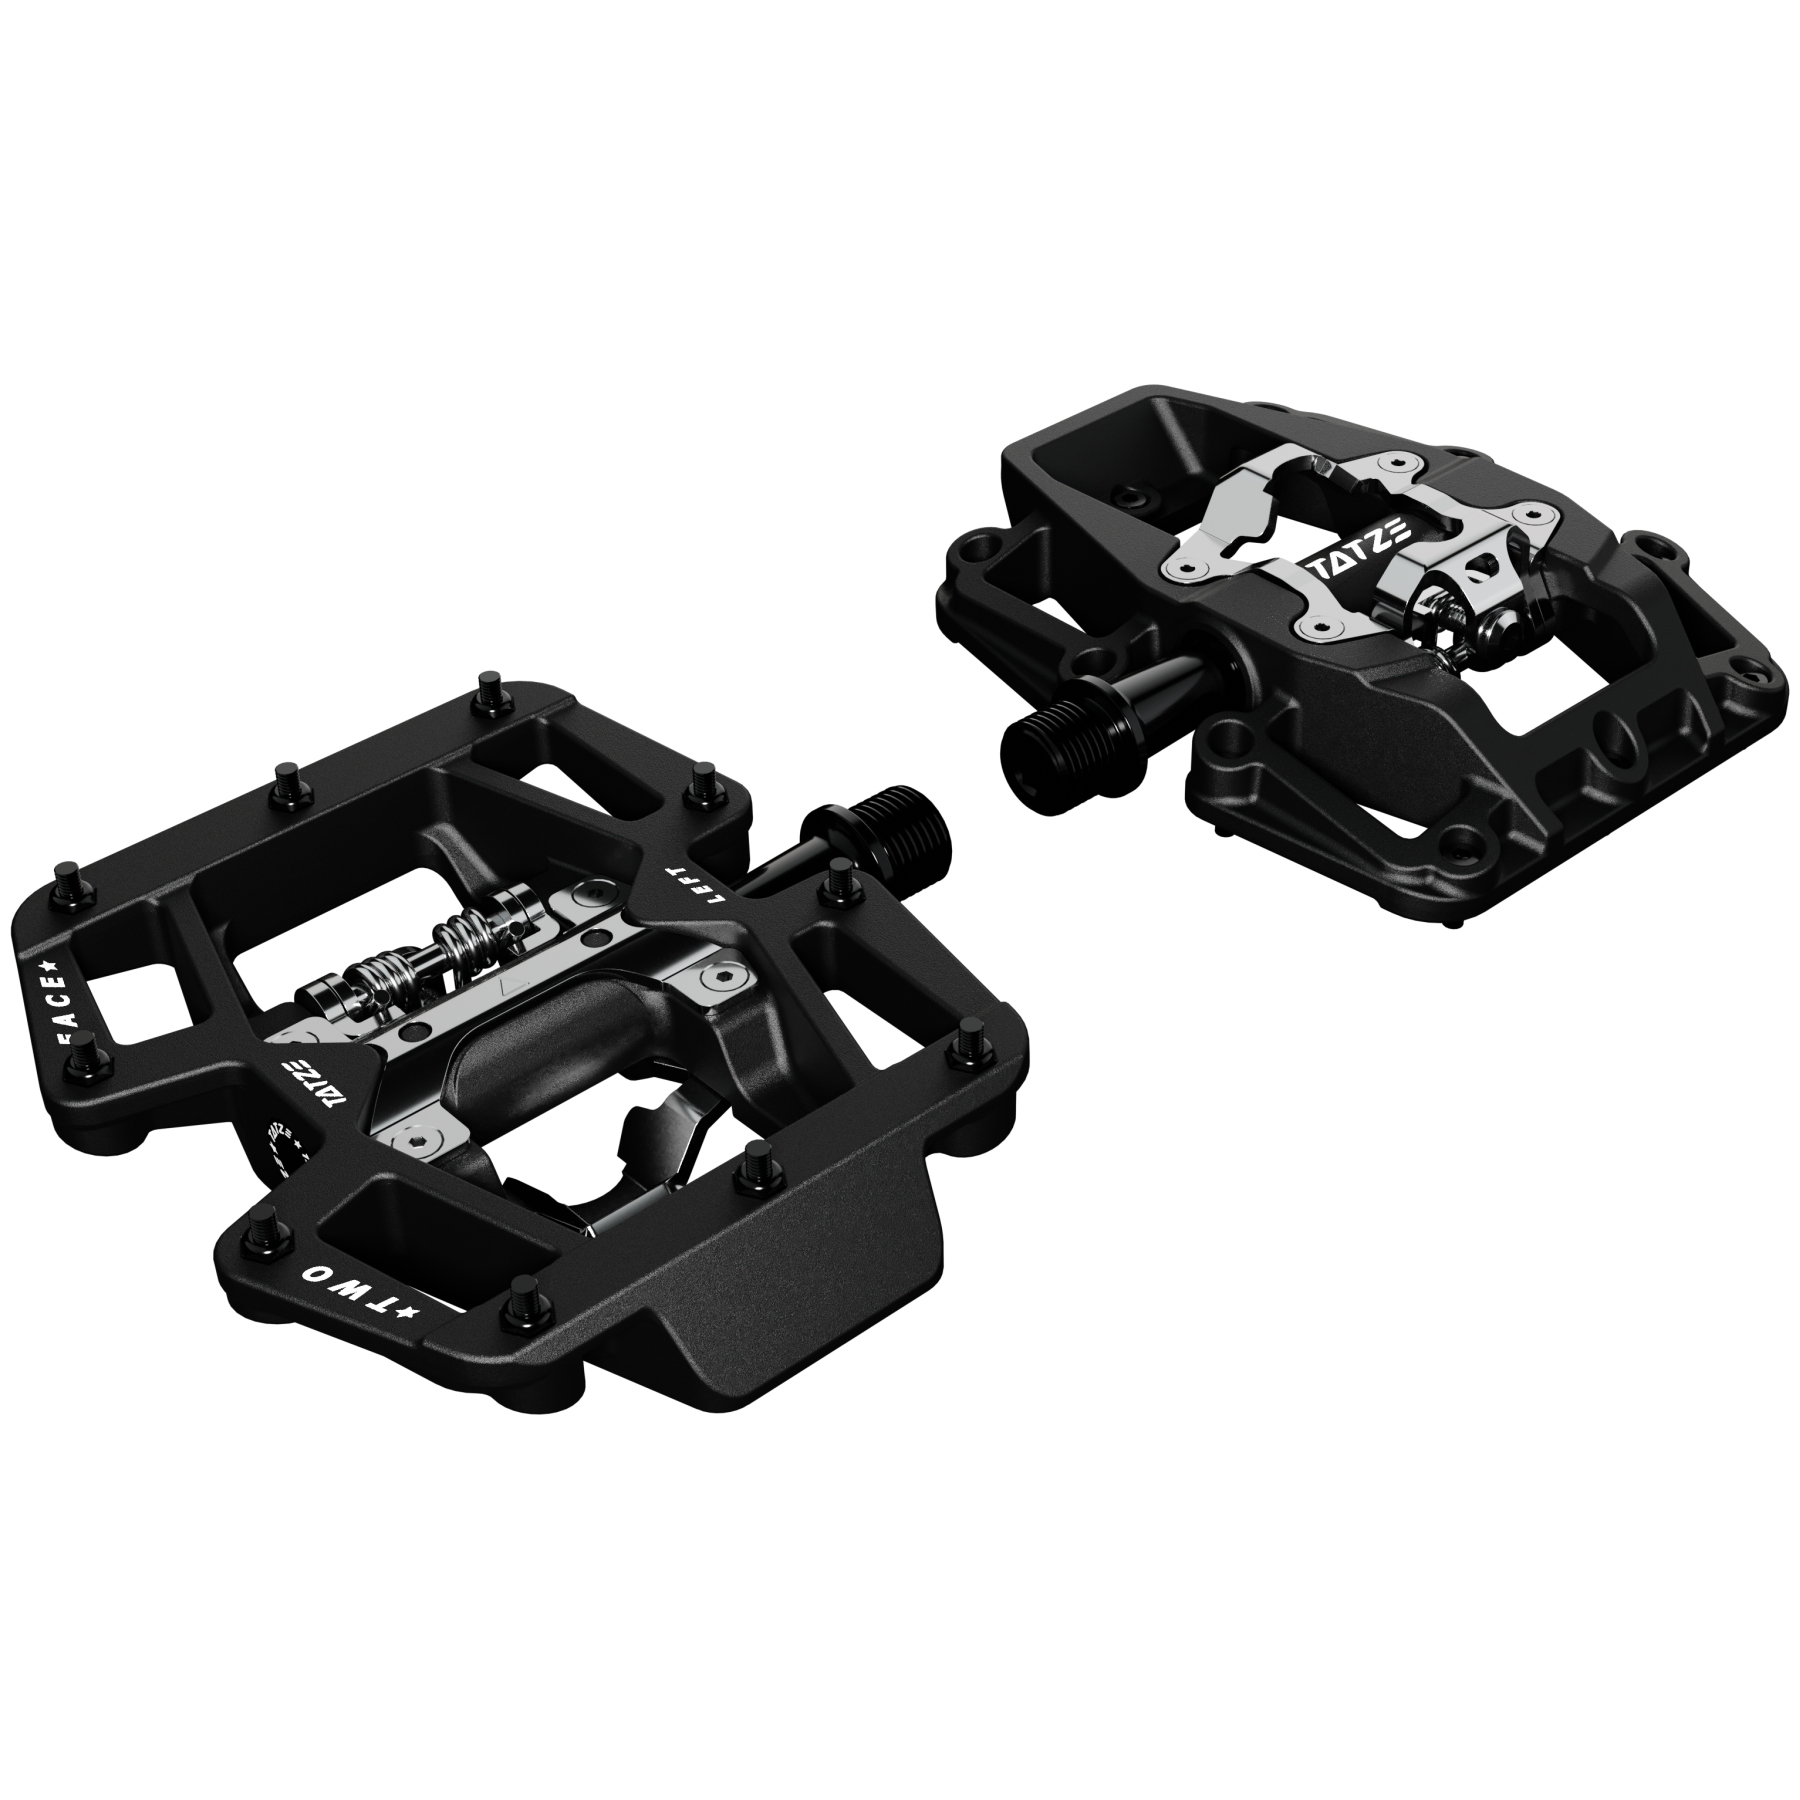 Productfoto van Tatze TWO-FACE COMPOSITE MTB Combined Pedals - black